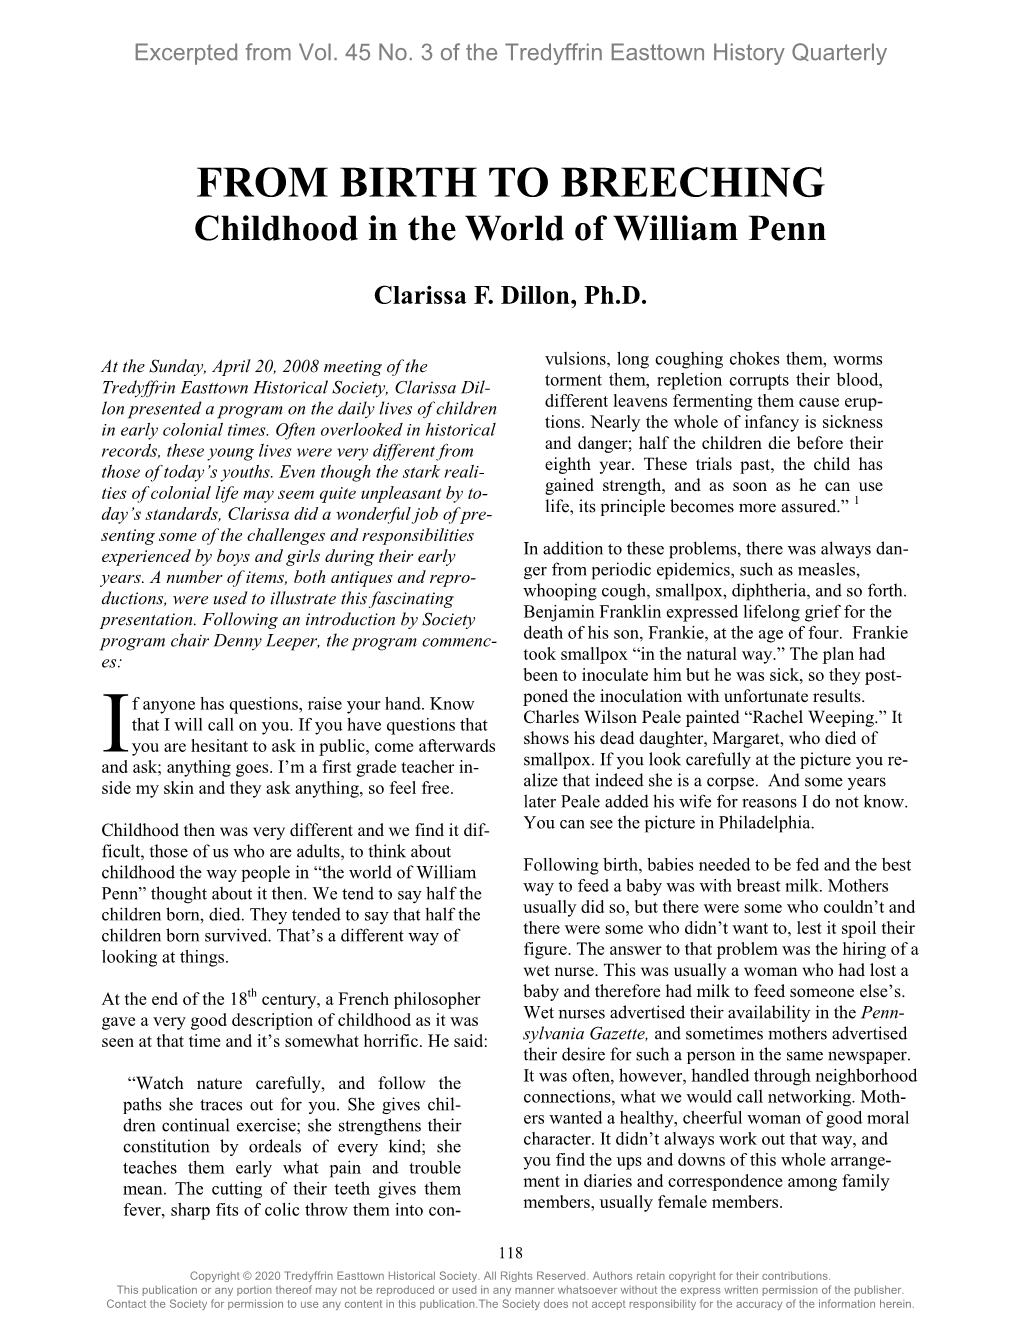 From Birth to Breeching: Childhood